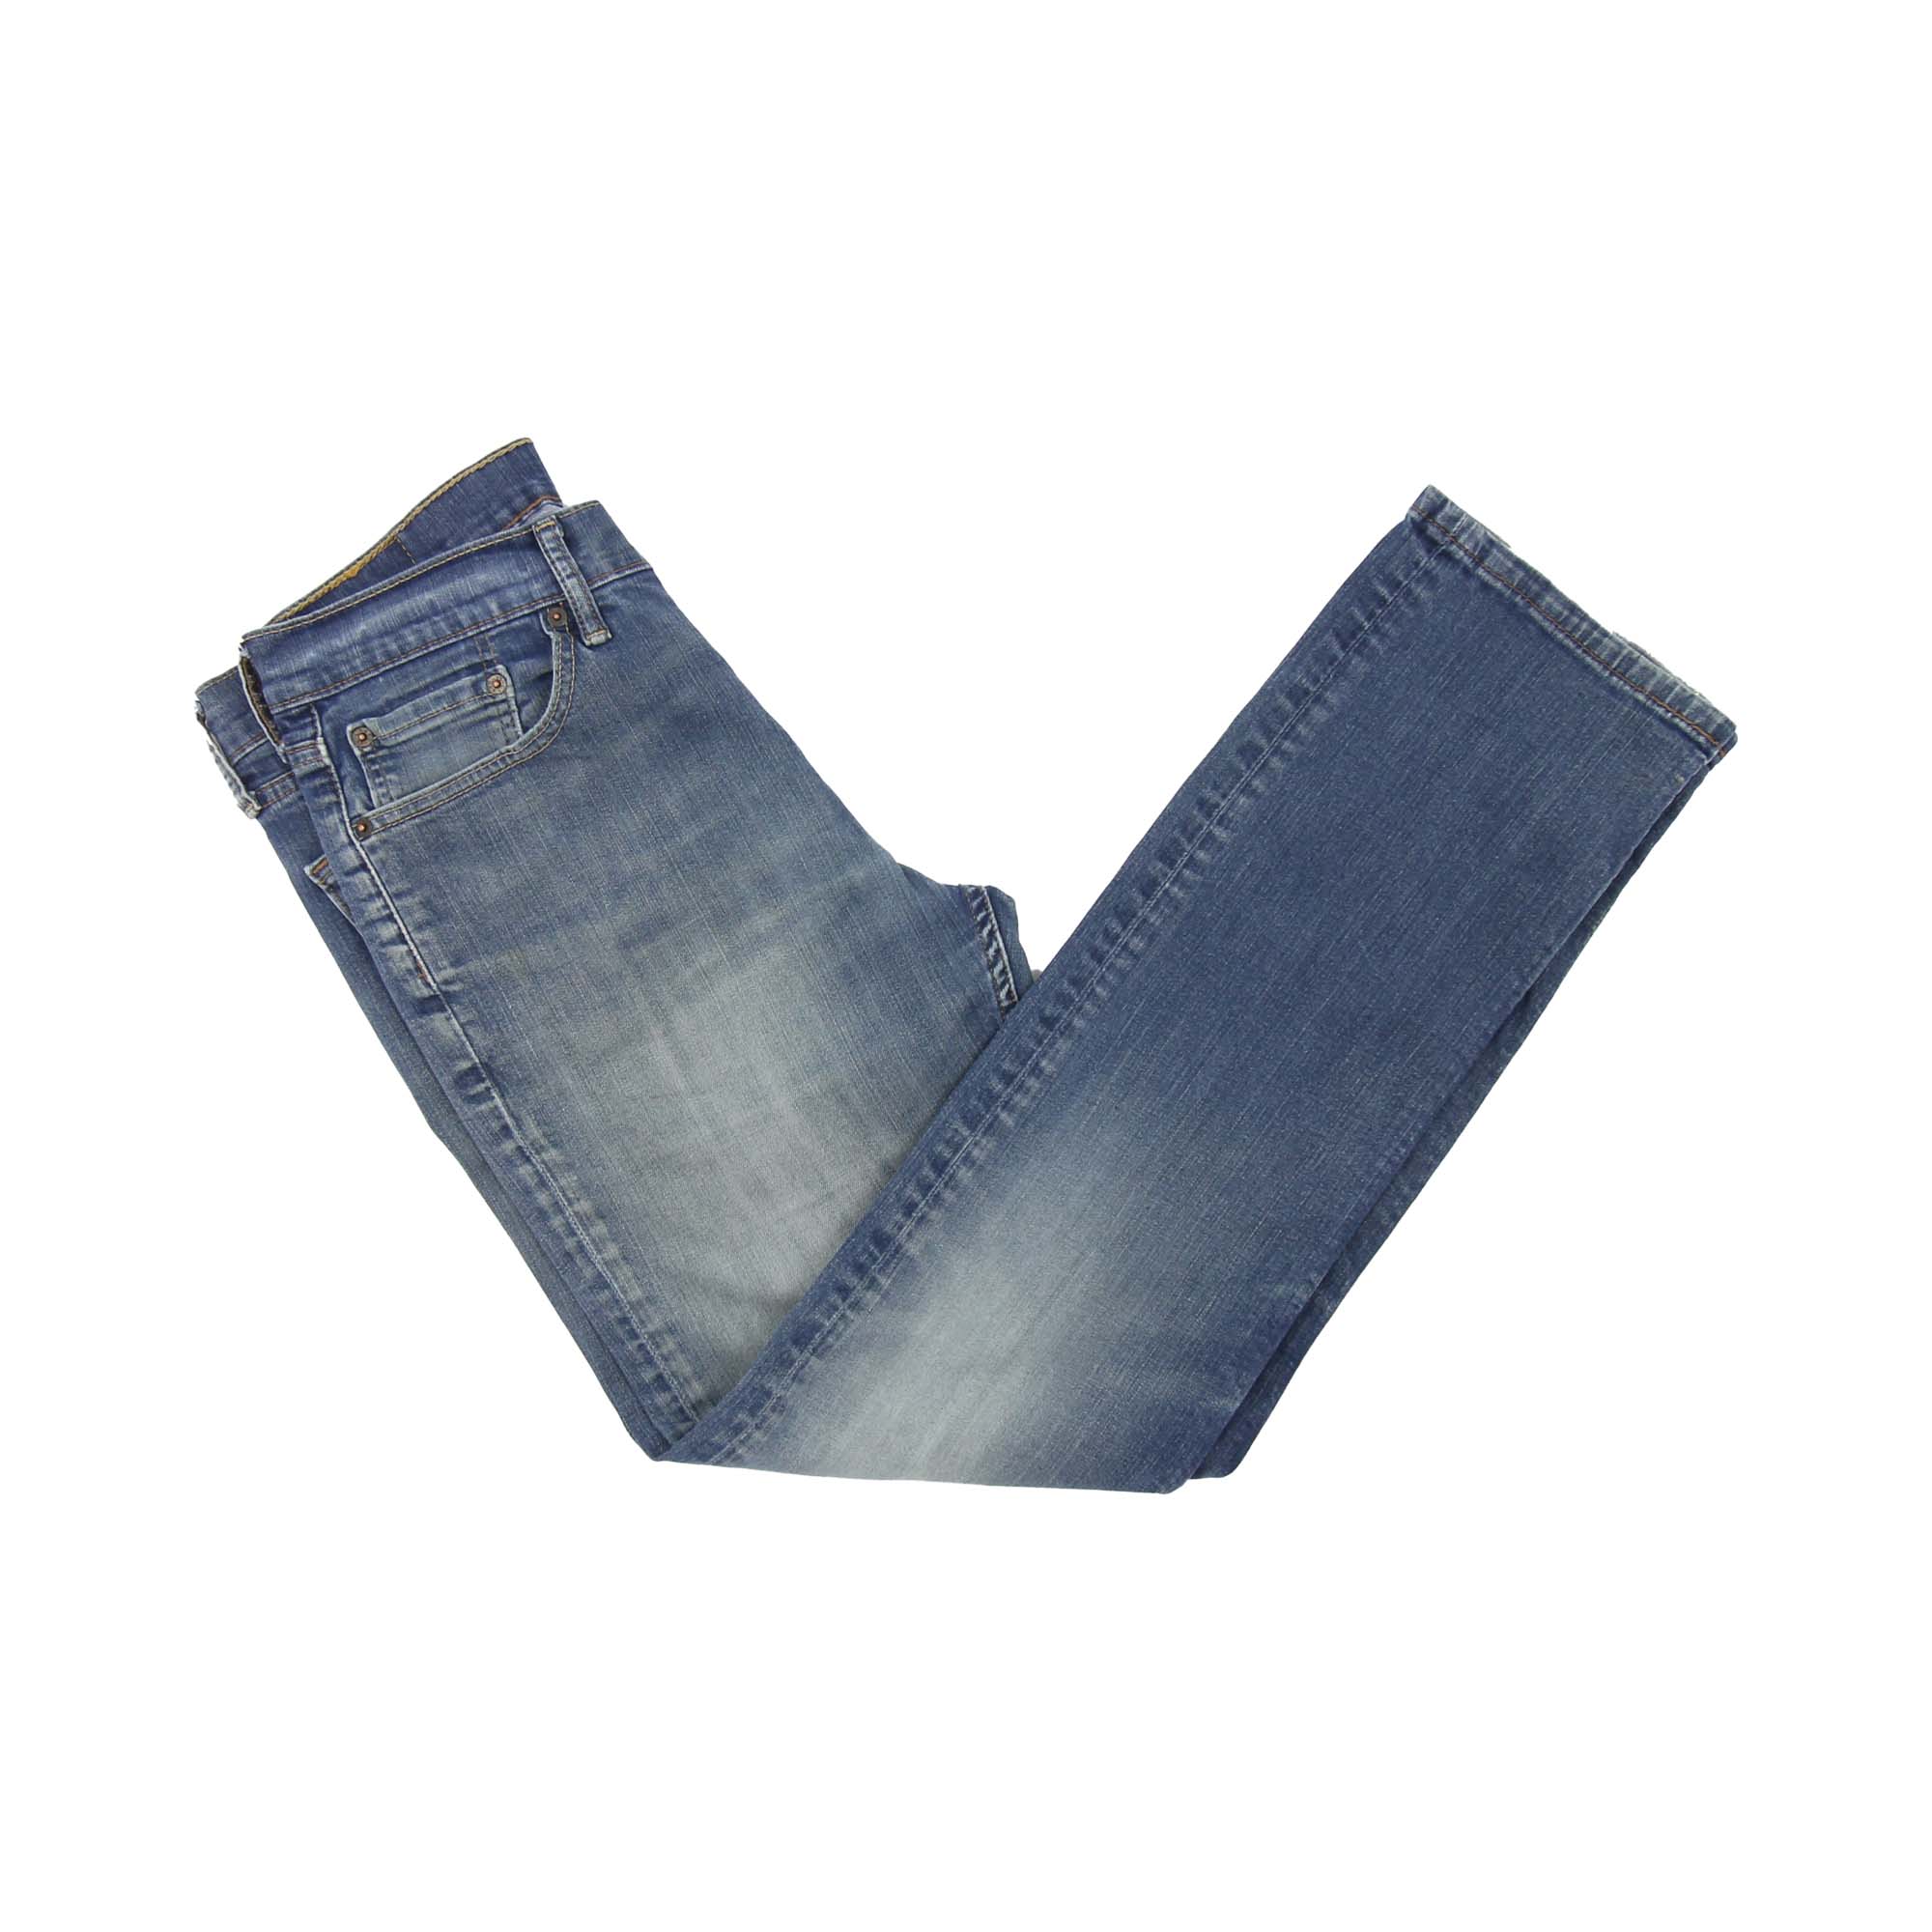 Levi's 514 Jeans  -   W33 L32